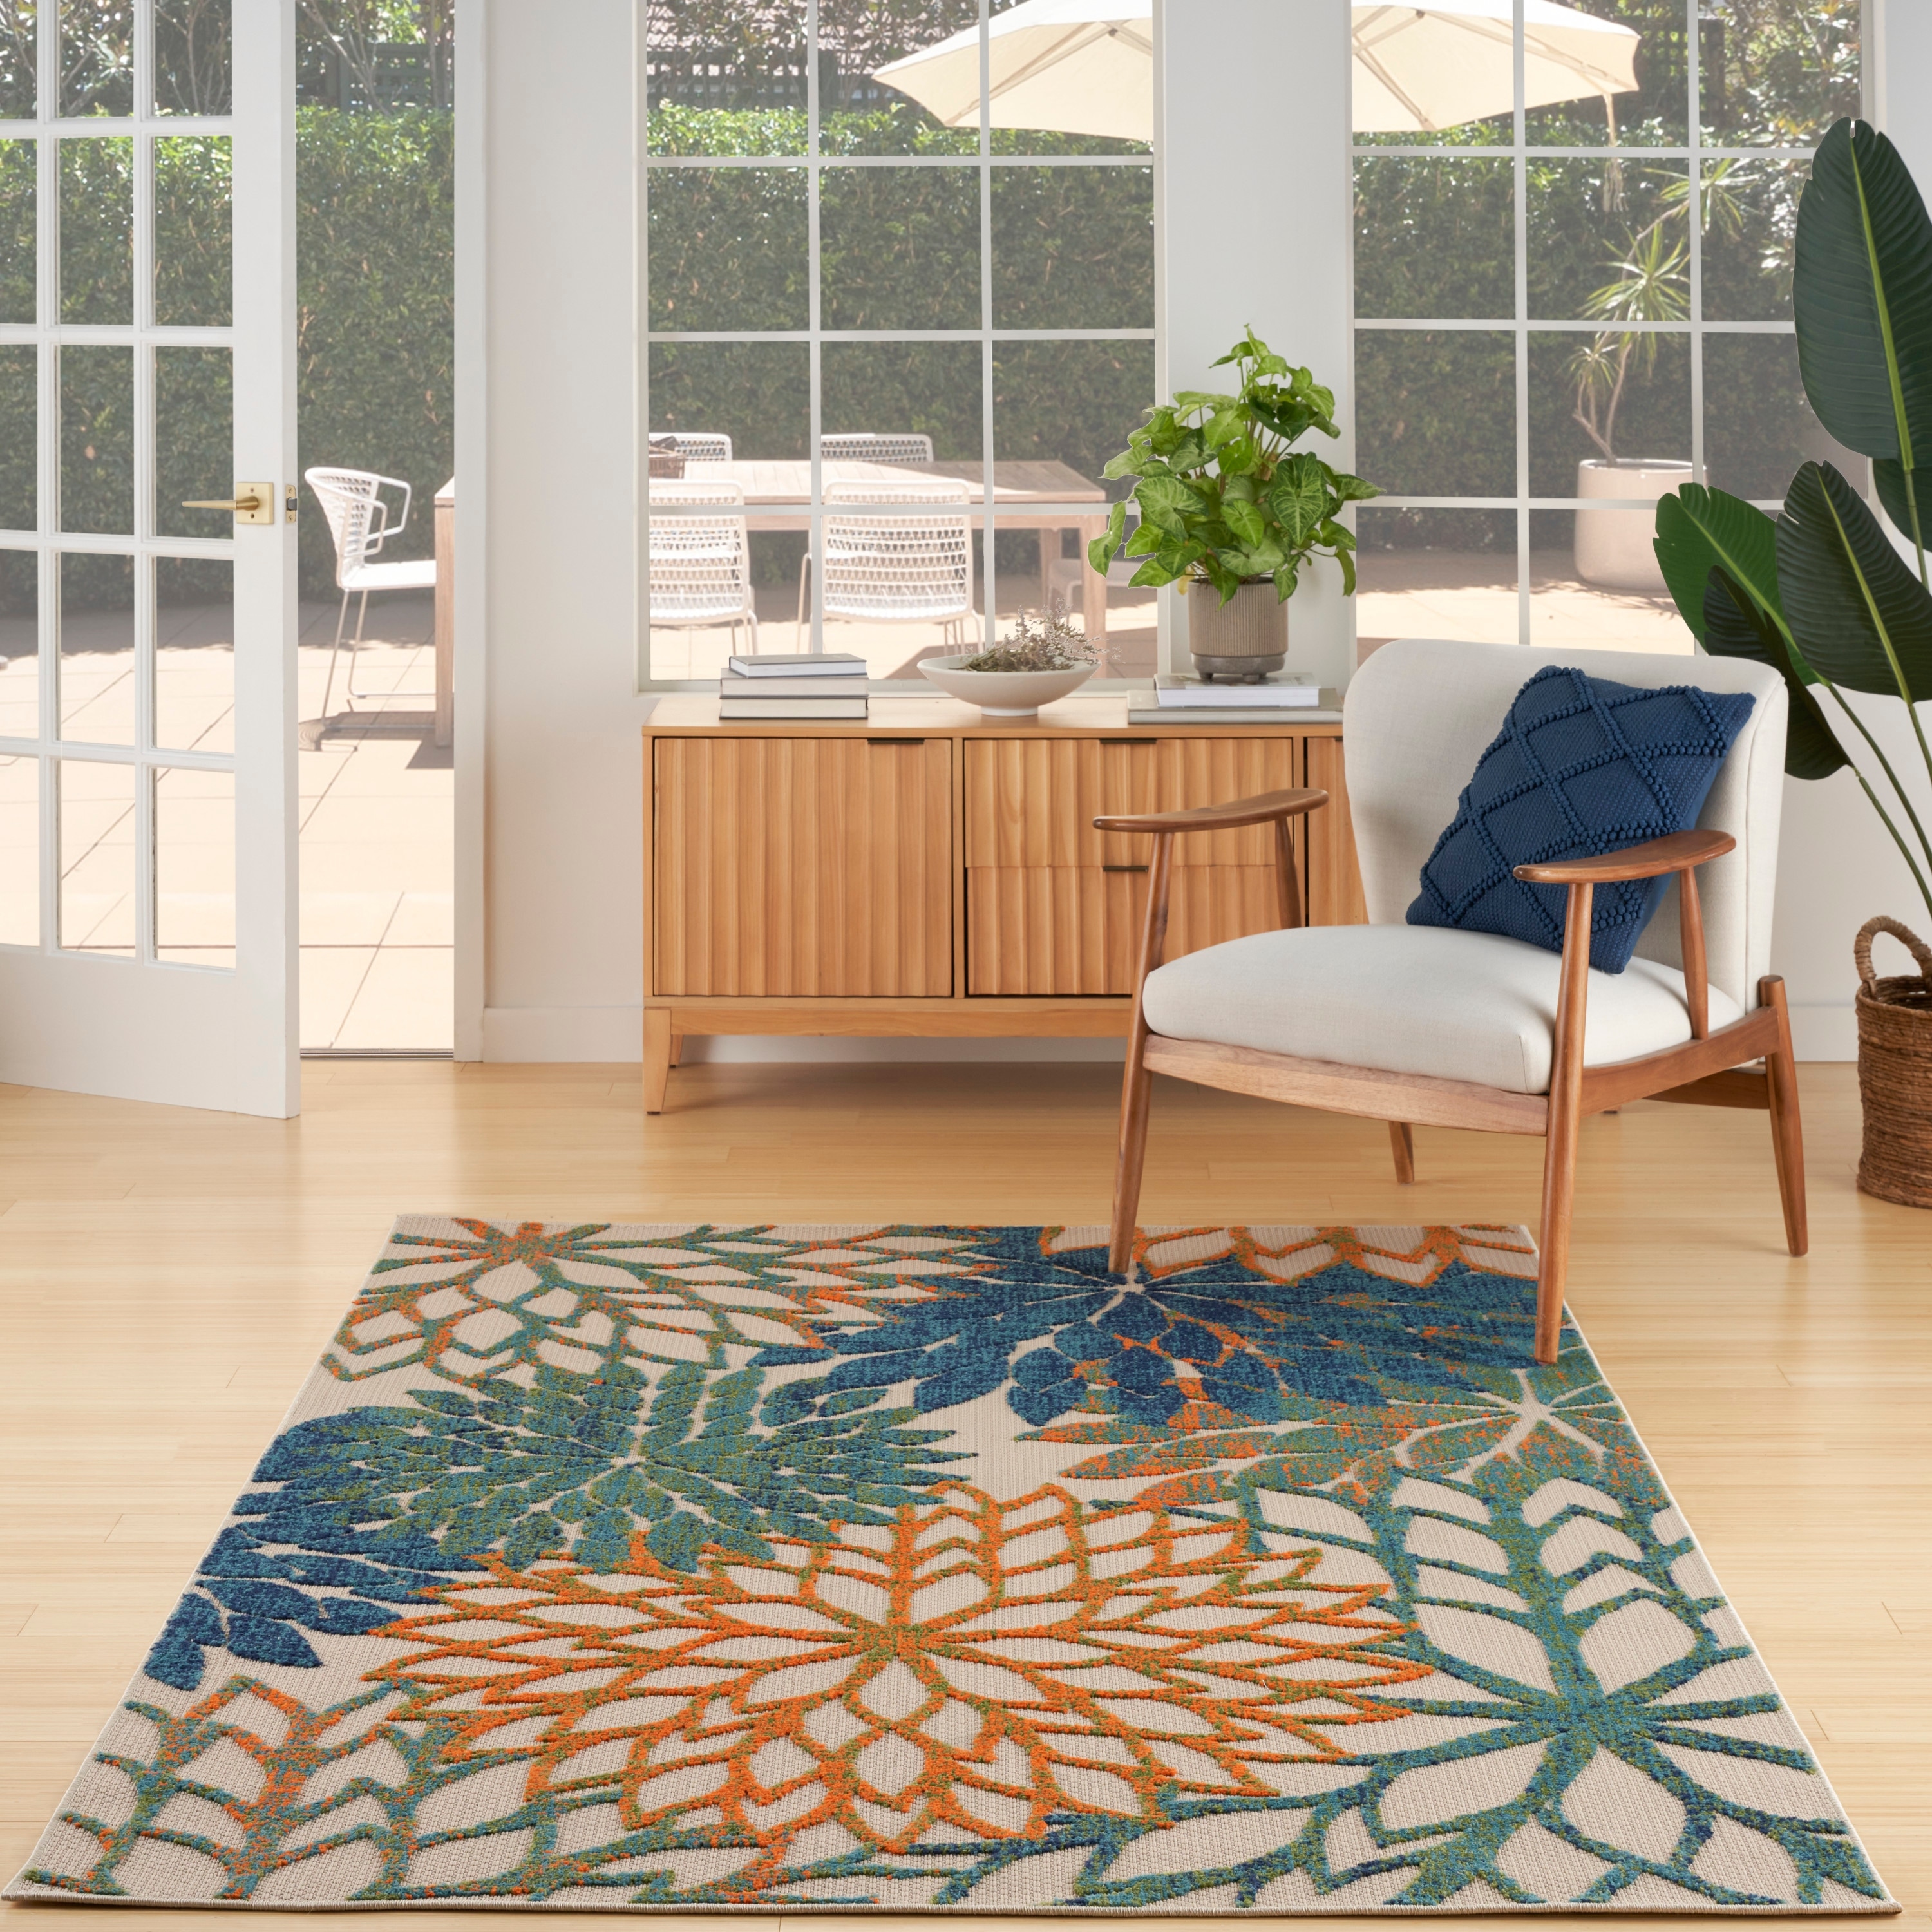 Tropical rectangular colored vinyl carpet